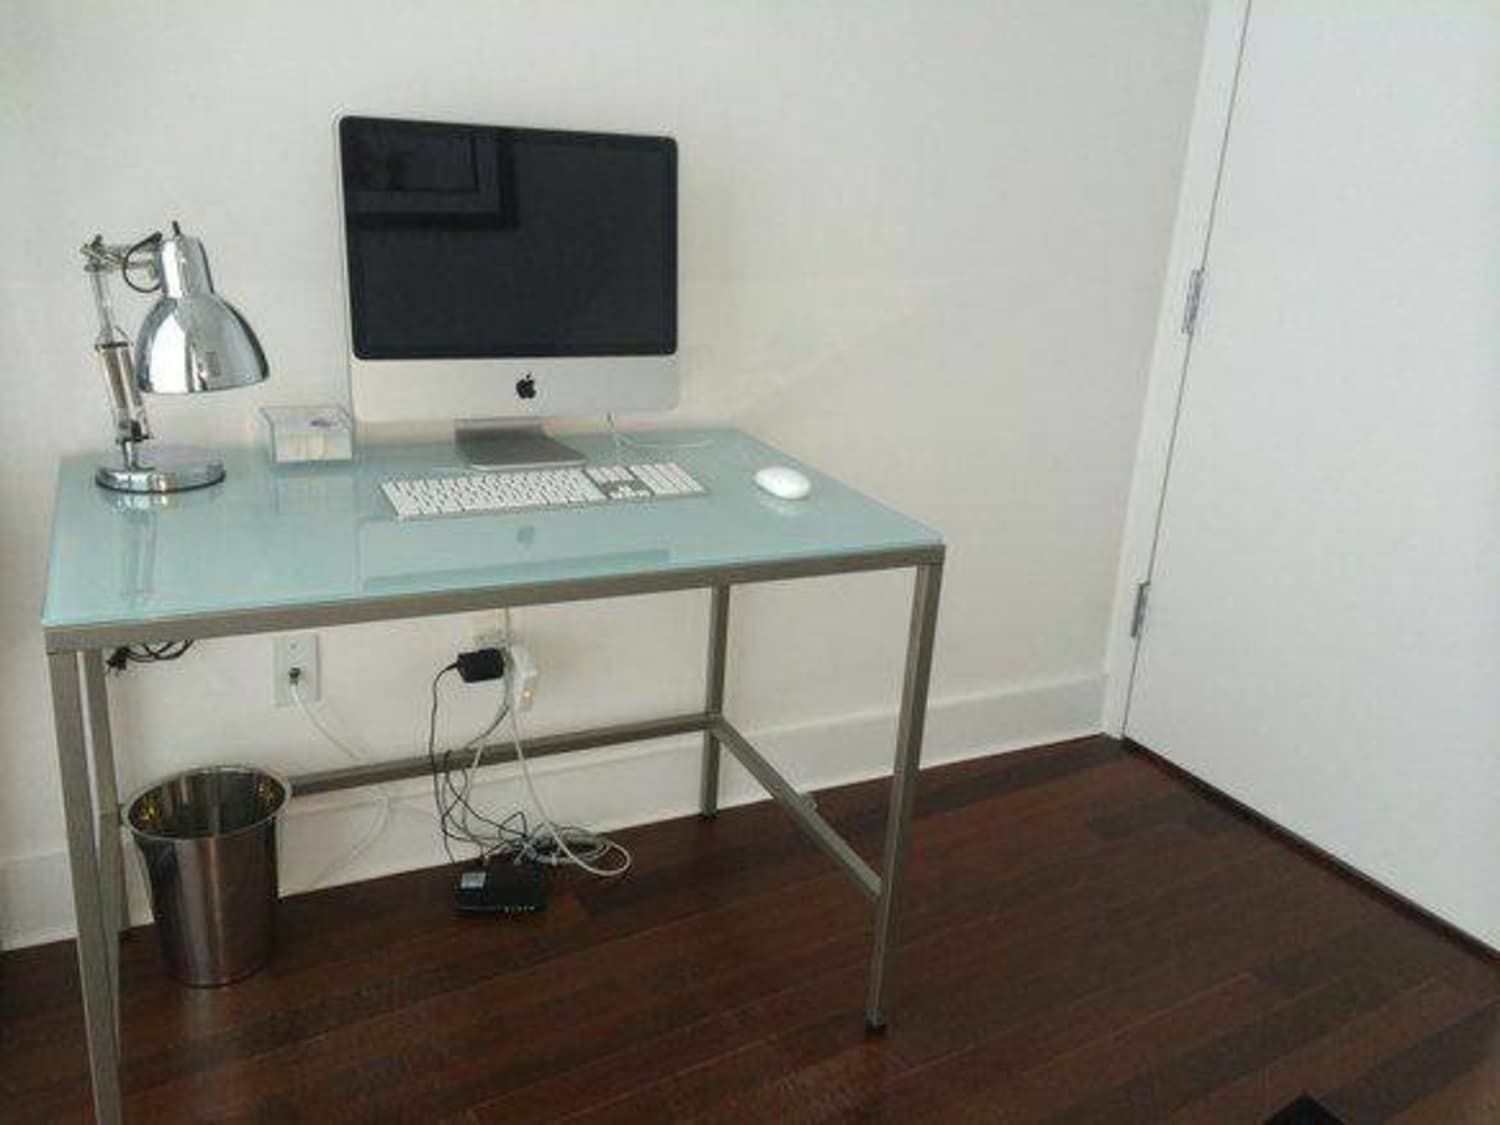 Cb2 Trig Desk Excellent Condition Apartment Therapy S Bazaar